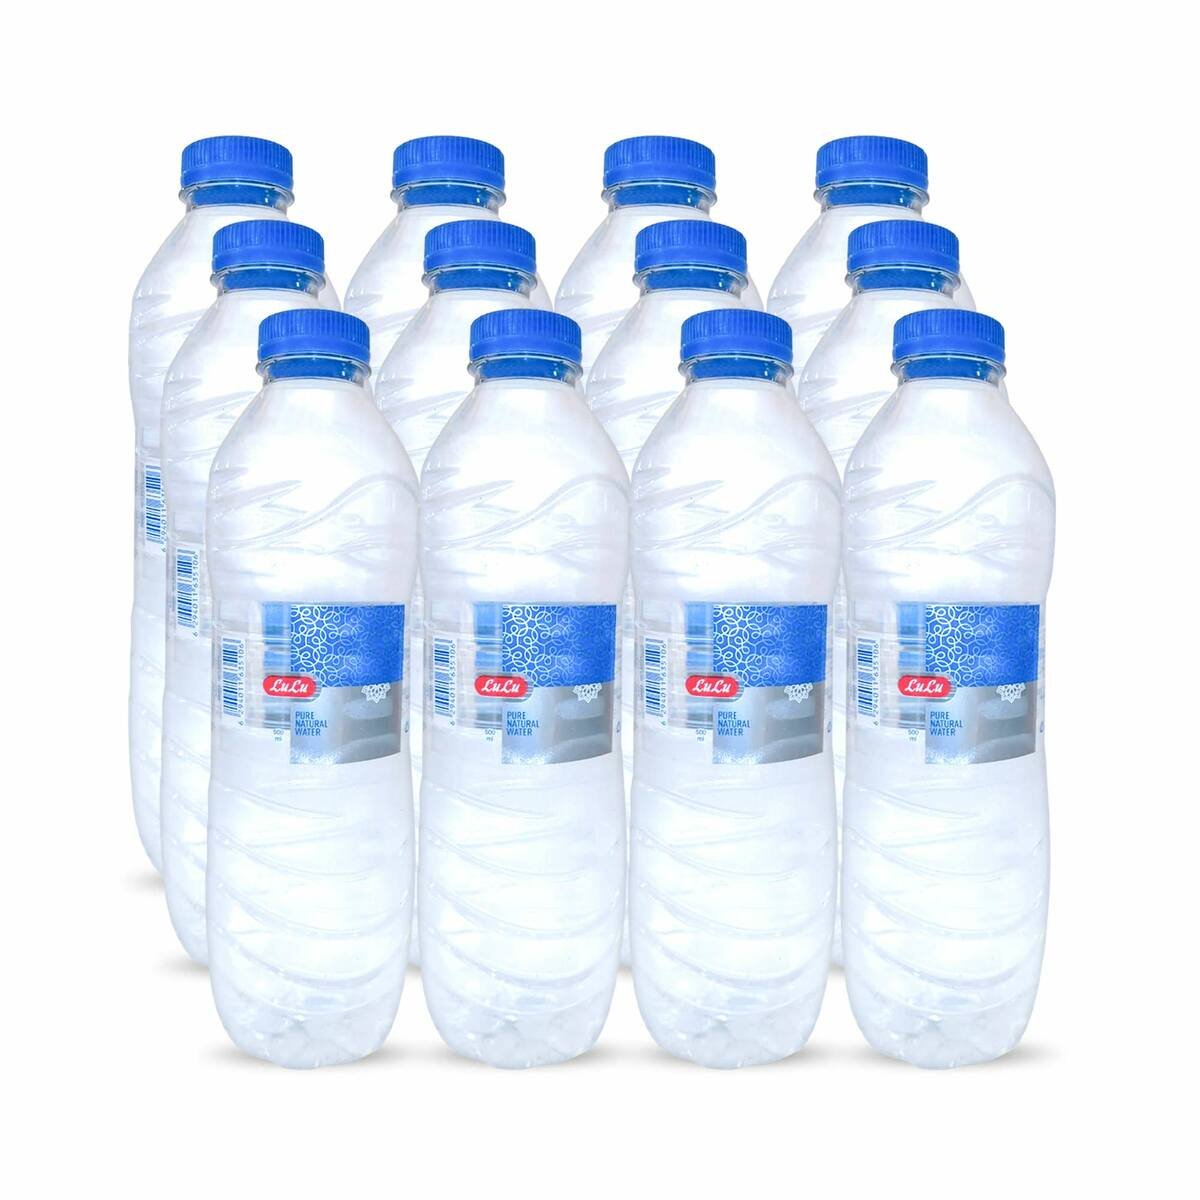 LuLu Natural Drinking Water 12 x 500ml